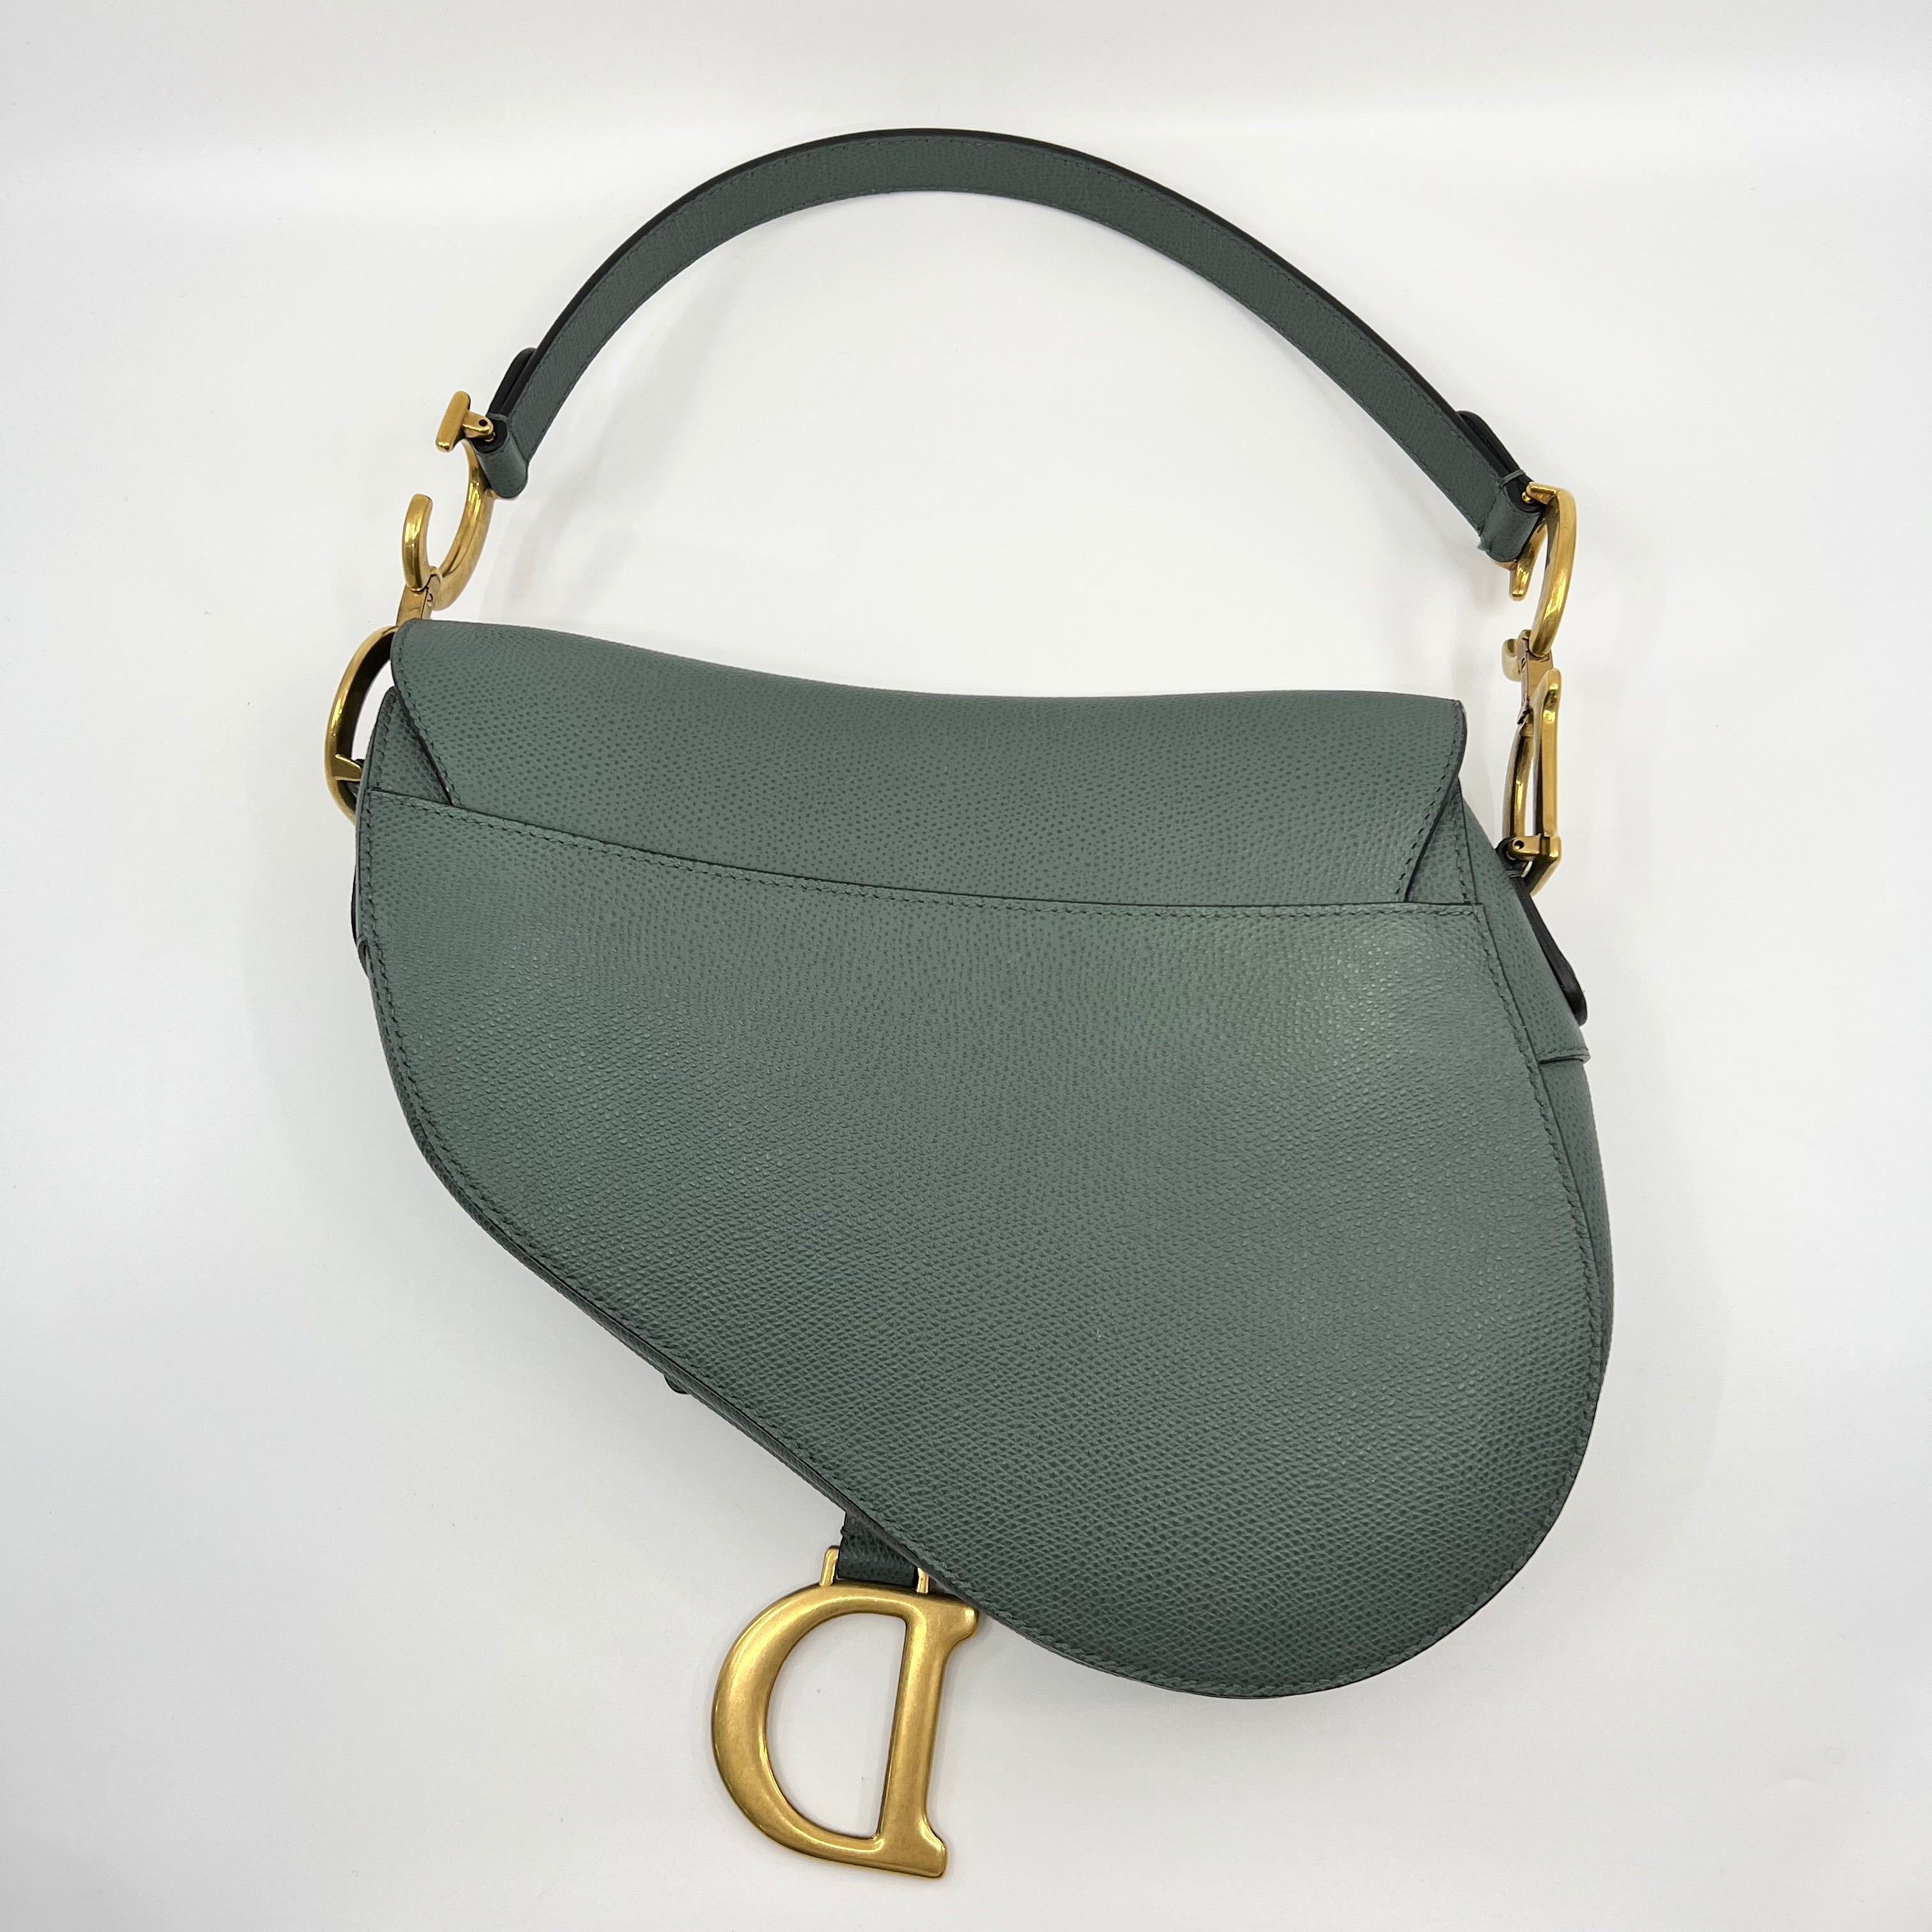 2020 Year Christian Dior Saddle Handbag Leather Medium Official price $5,635USD +tax